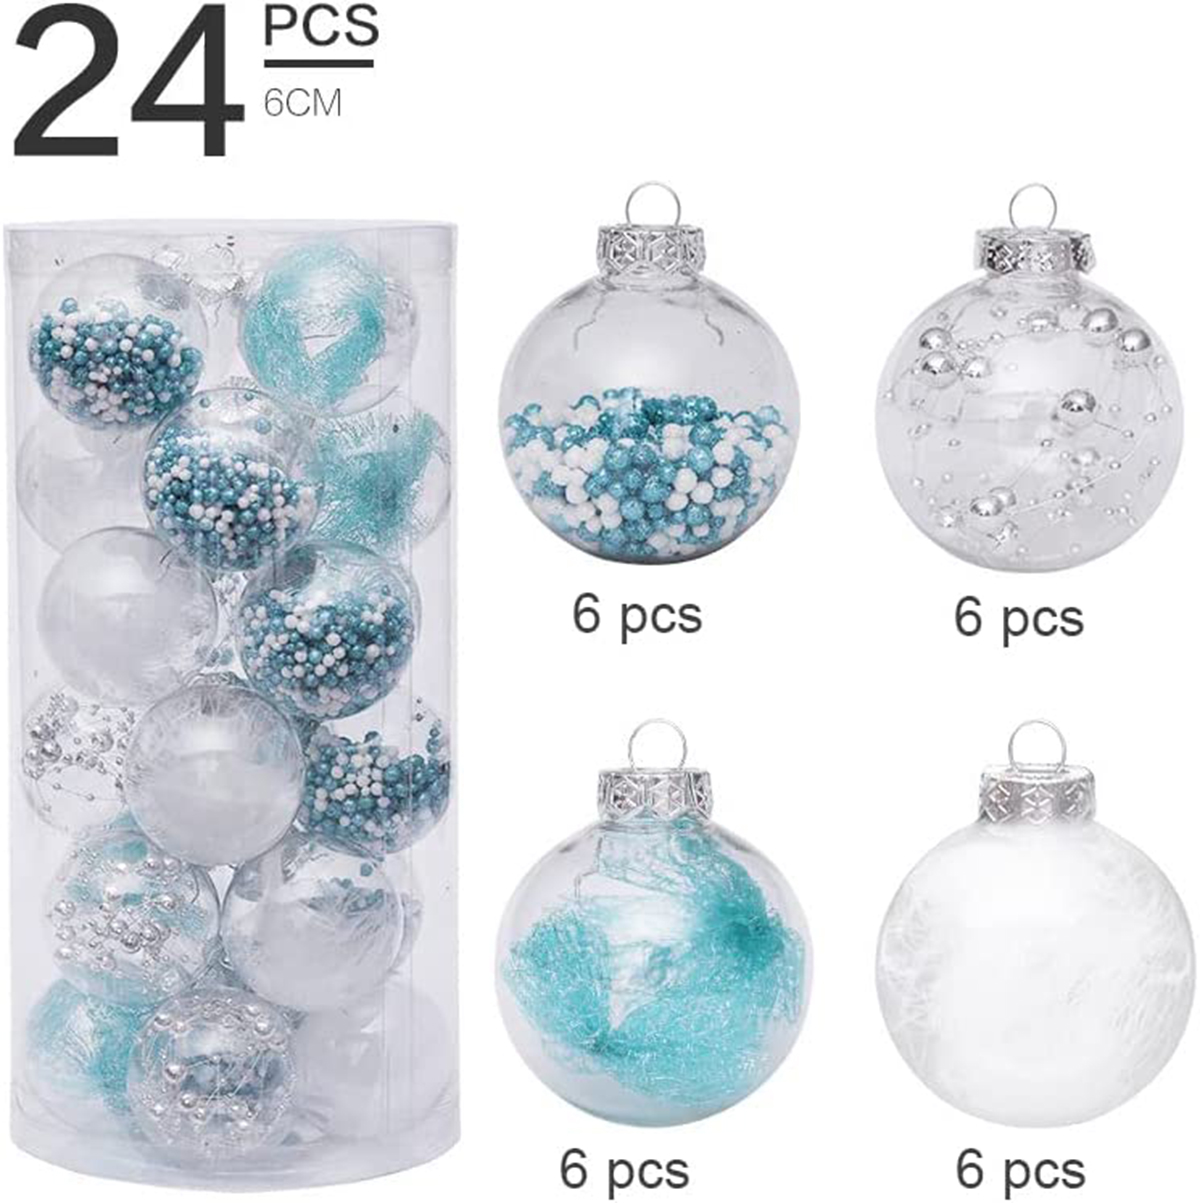 24 PCS Clear Christmas Ball Ornaments 6CM-Lt.Blue